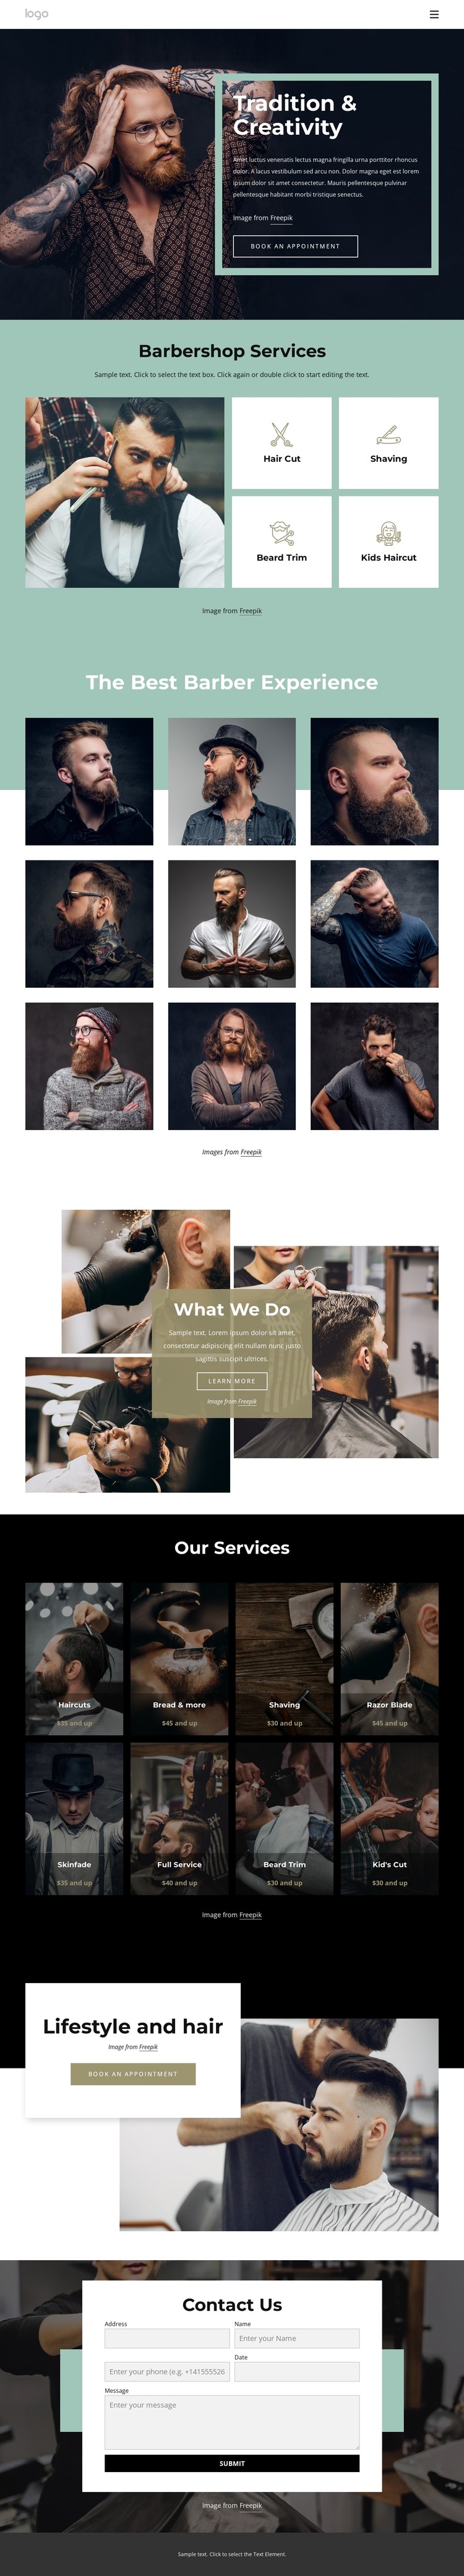 Public barber salon CSS Template